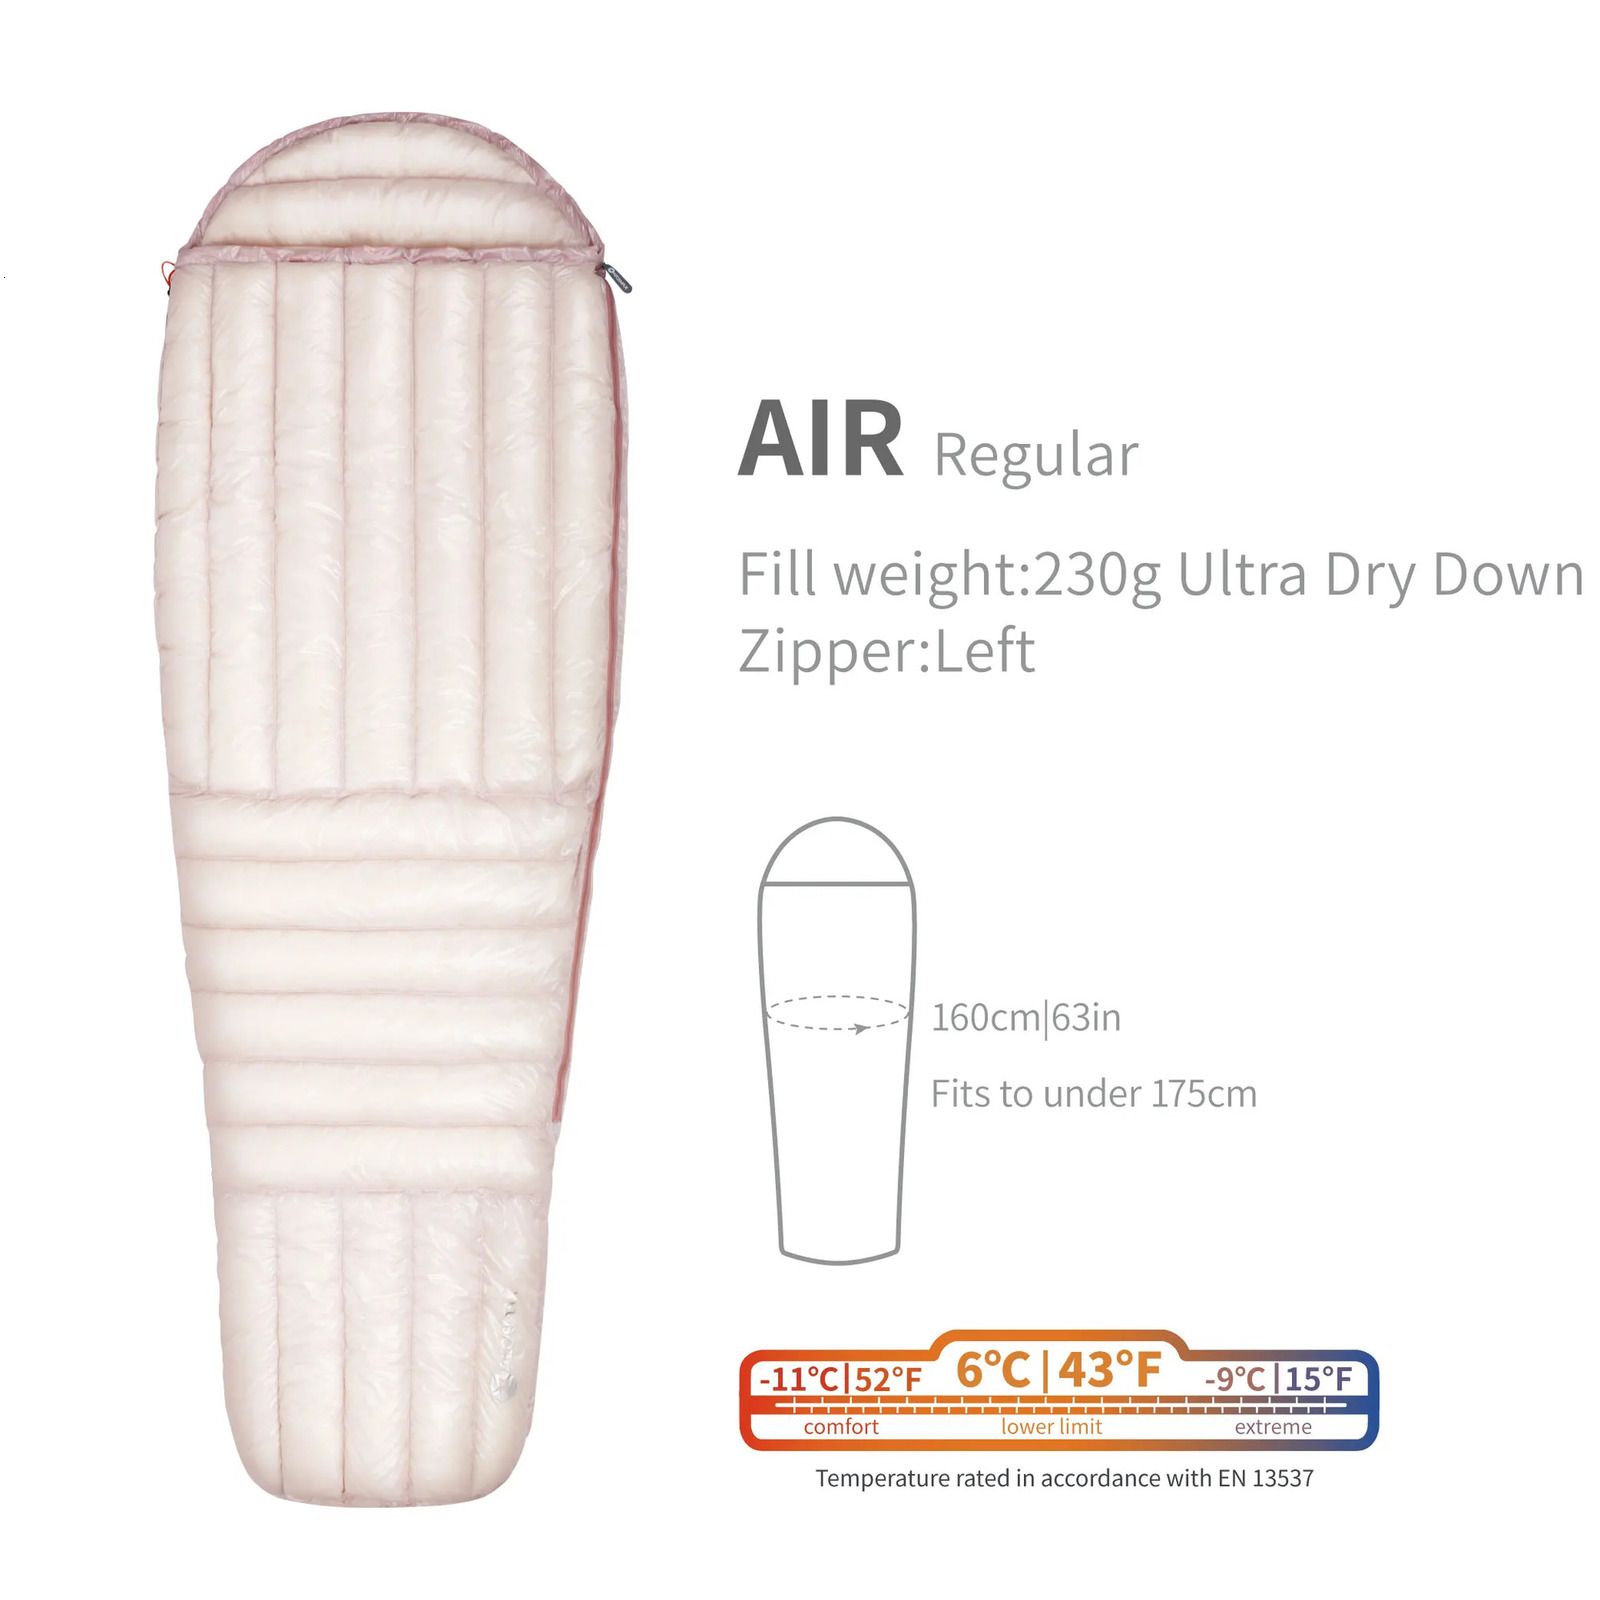 Air Regular